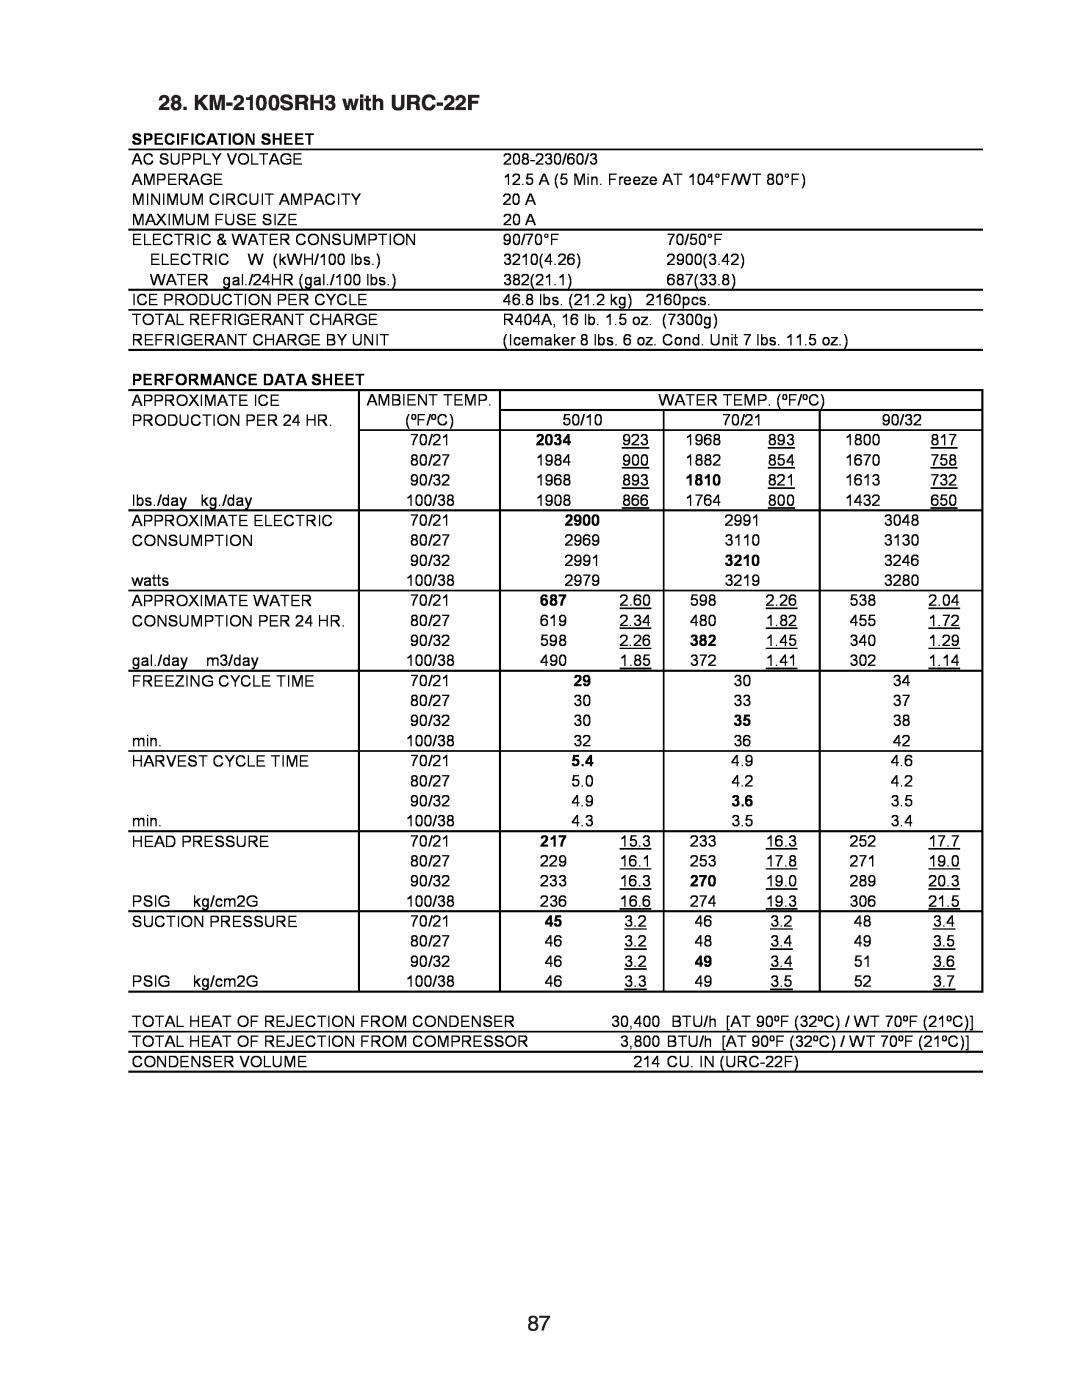 Hoshizaki SRH3 KMH-2000SWH/3, SRH/3 KM-2100SRH3 with URC-22F, Specification Sheet, Performance Data Sheet, 3210 